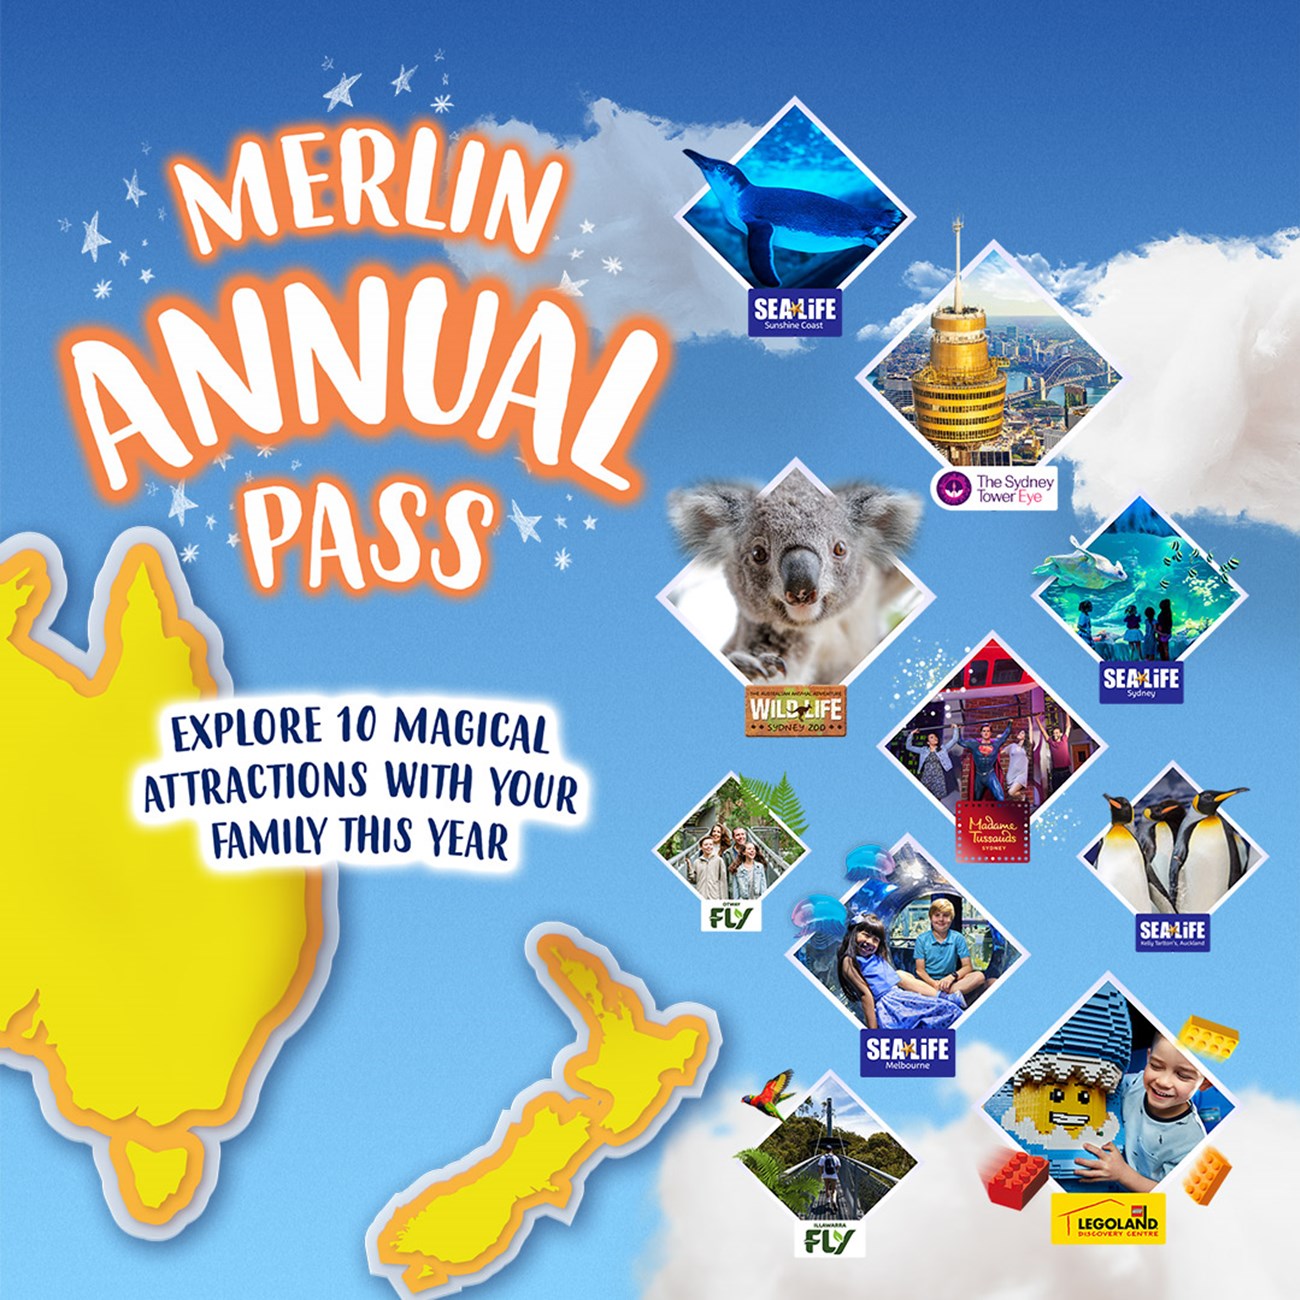 Merlin Annual Pass Australia & New Zealand